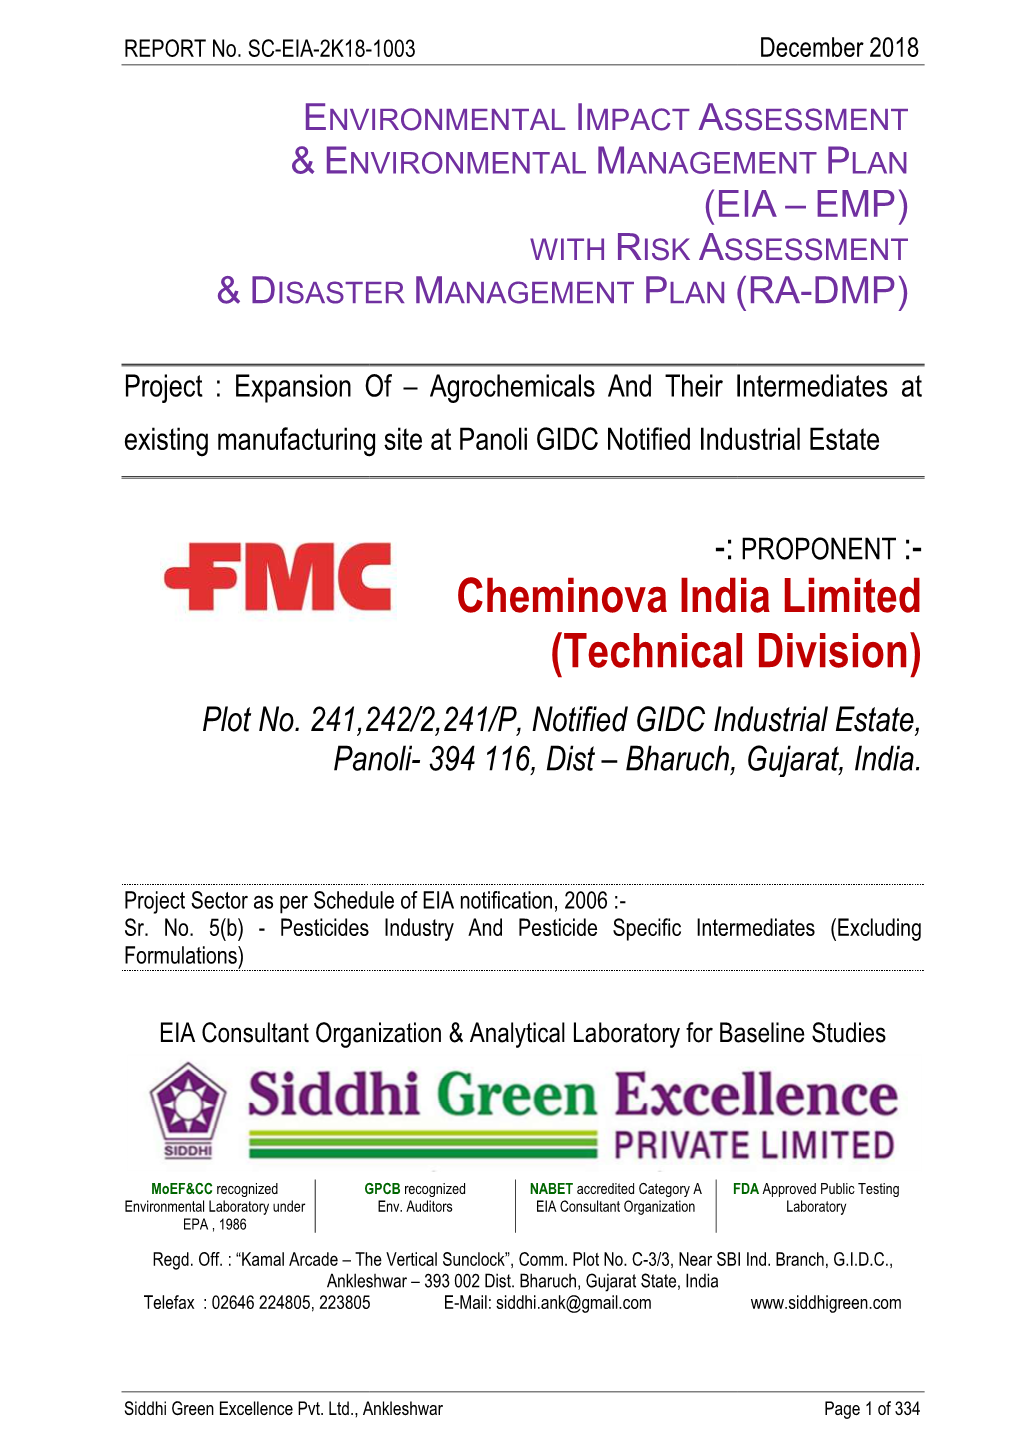 Cheminova India Limited ( Technical Division )